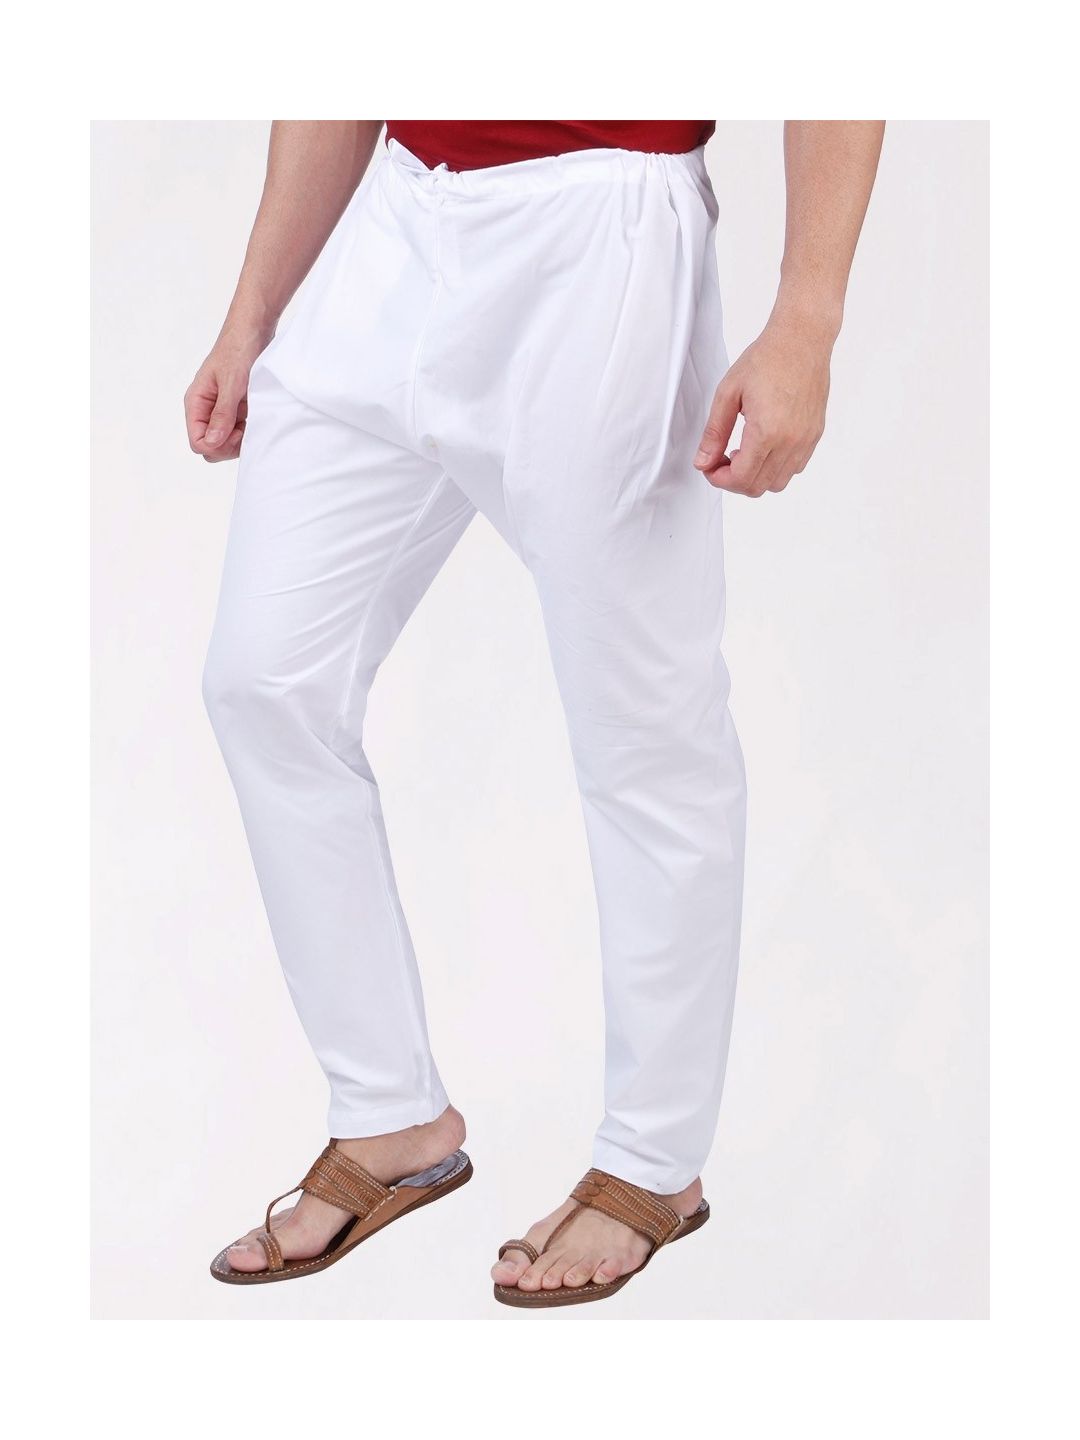 Mens Churidar  Buy Cream Silk Cotton Mens Chudidar Online India   Rajubhai Hargovindas Color Beige Pyjama Wiast 34